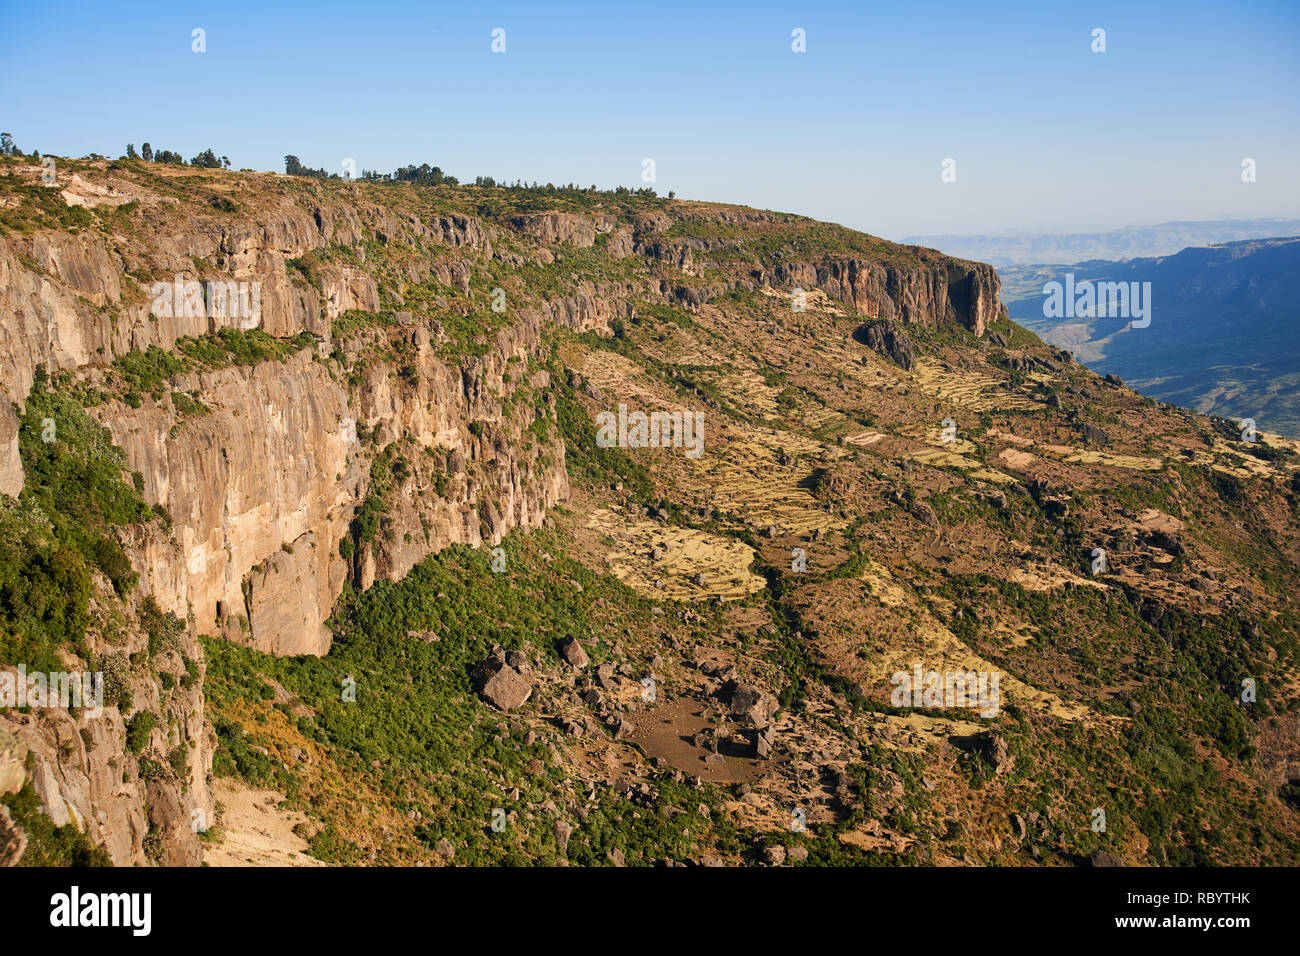 Beautiful landscape photographed near Debre Libanos in Ethiopia Stock Photo